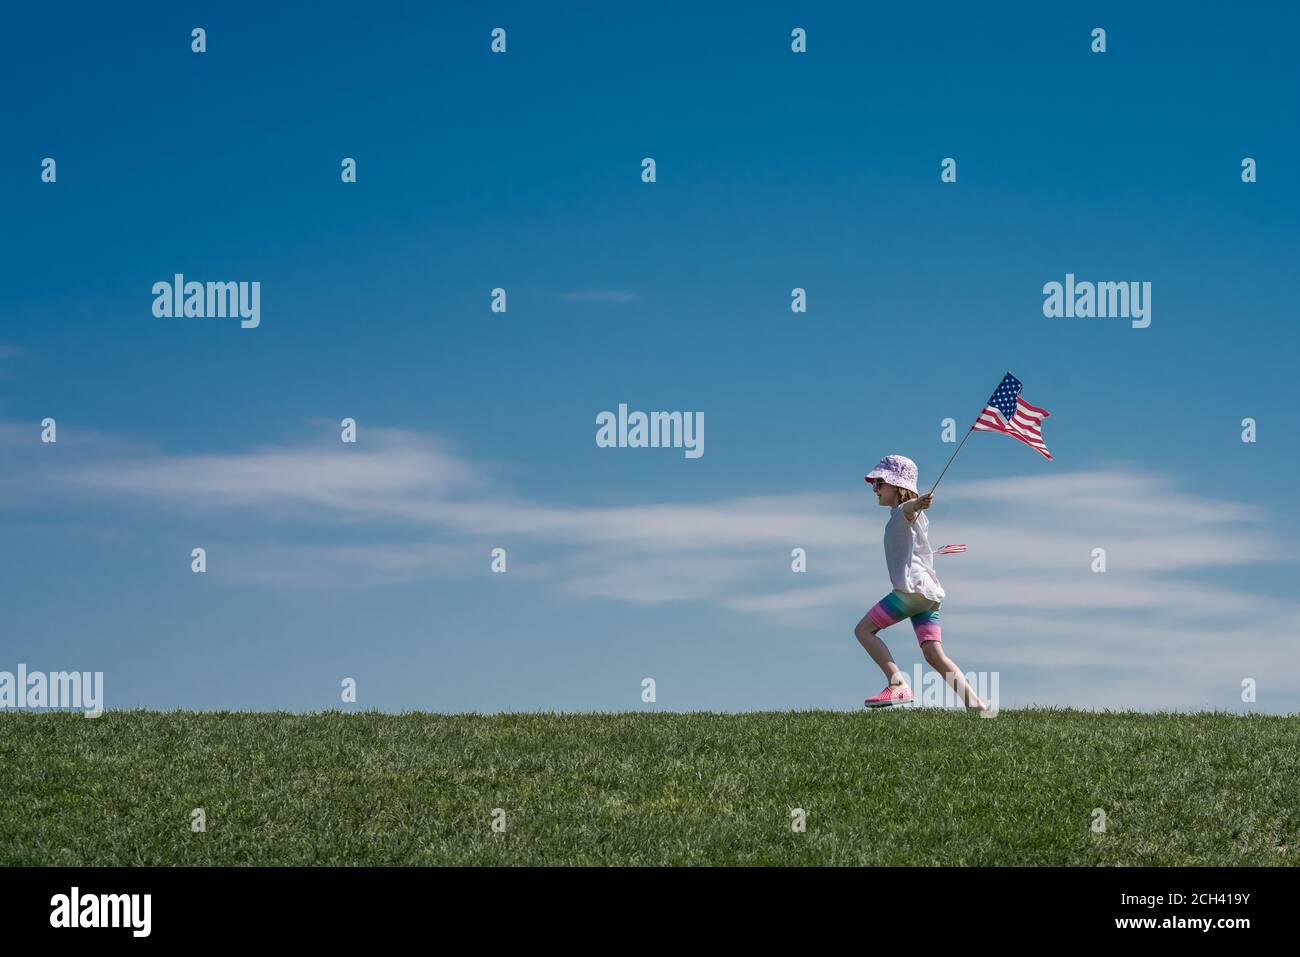 young girl runs across a grass hill waving 2 American flags Stock Photo